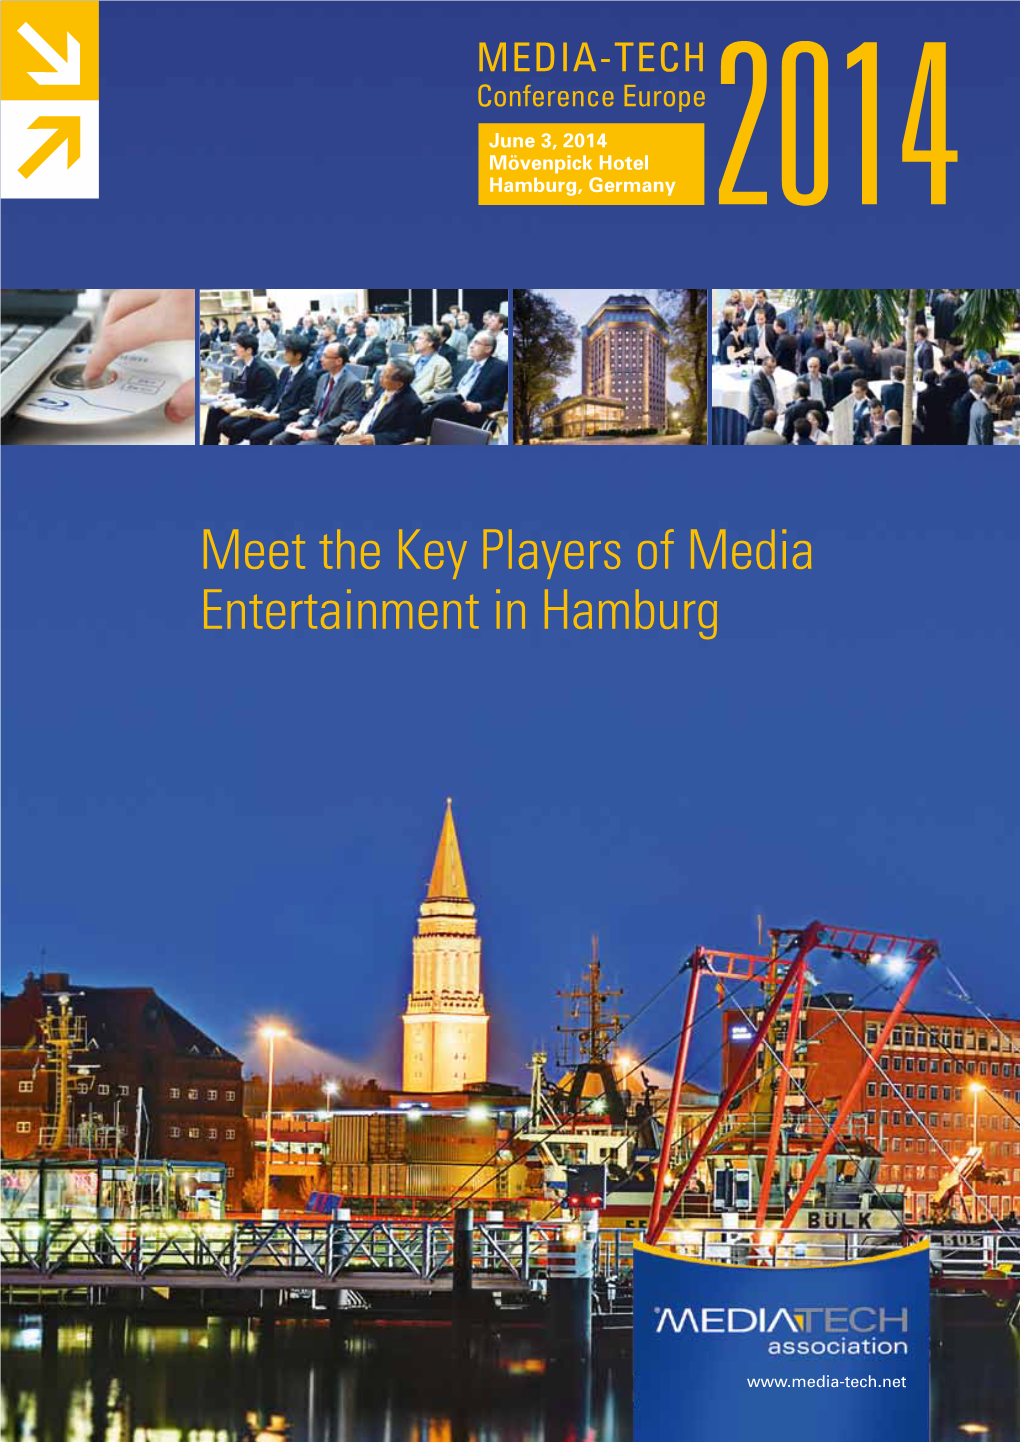 Meet the Key Players of Media Entertainment in Hamburg